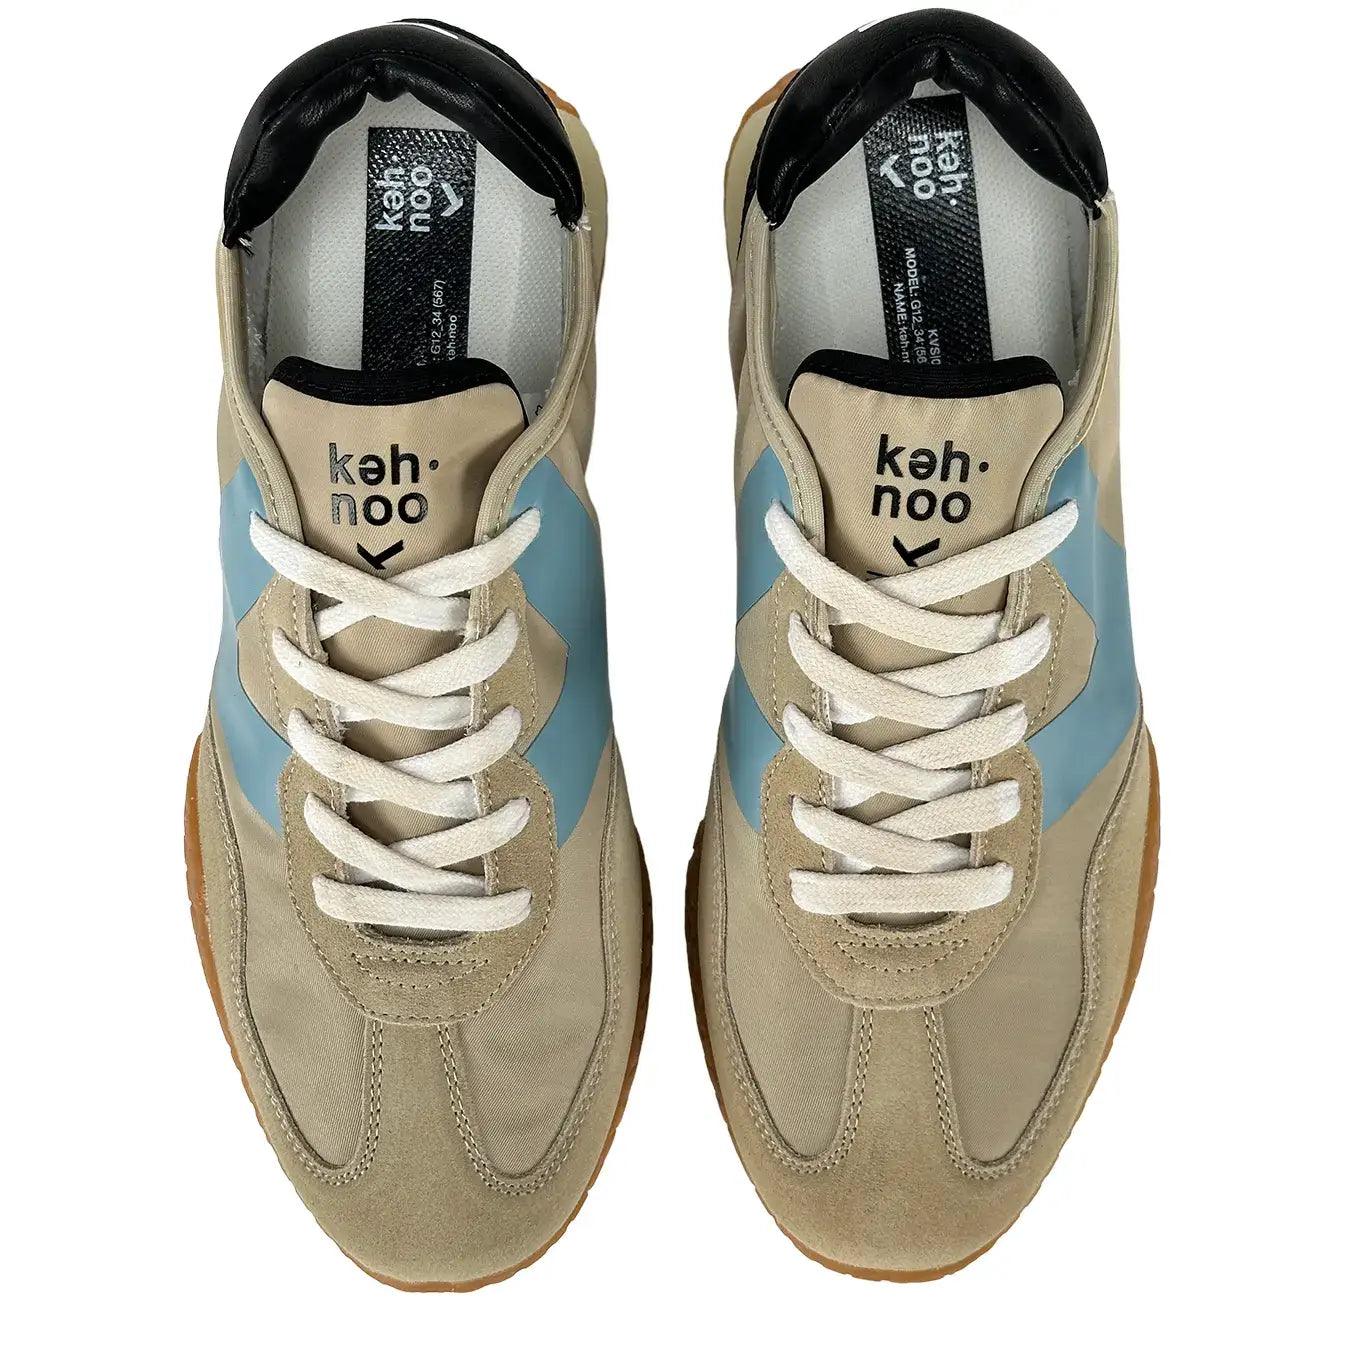 keh noo Sneakers, Km9313, Logo Celeste, Beige Celeste, Bassiniboutique.it, 2023 p/e